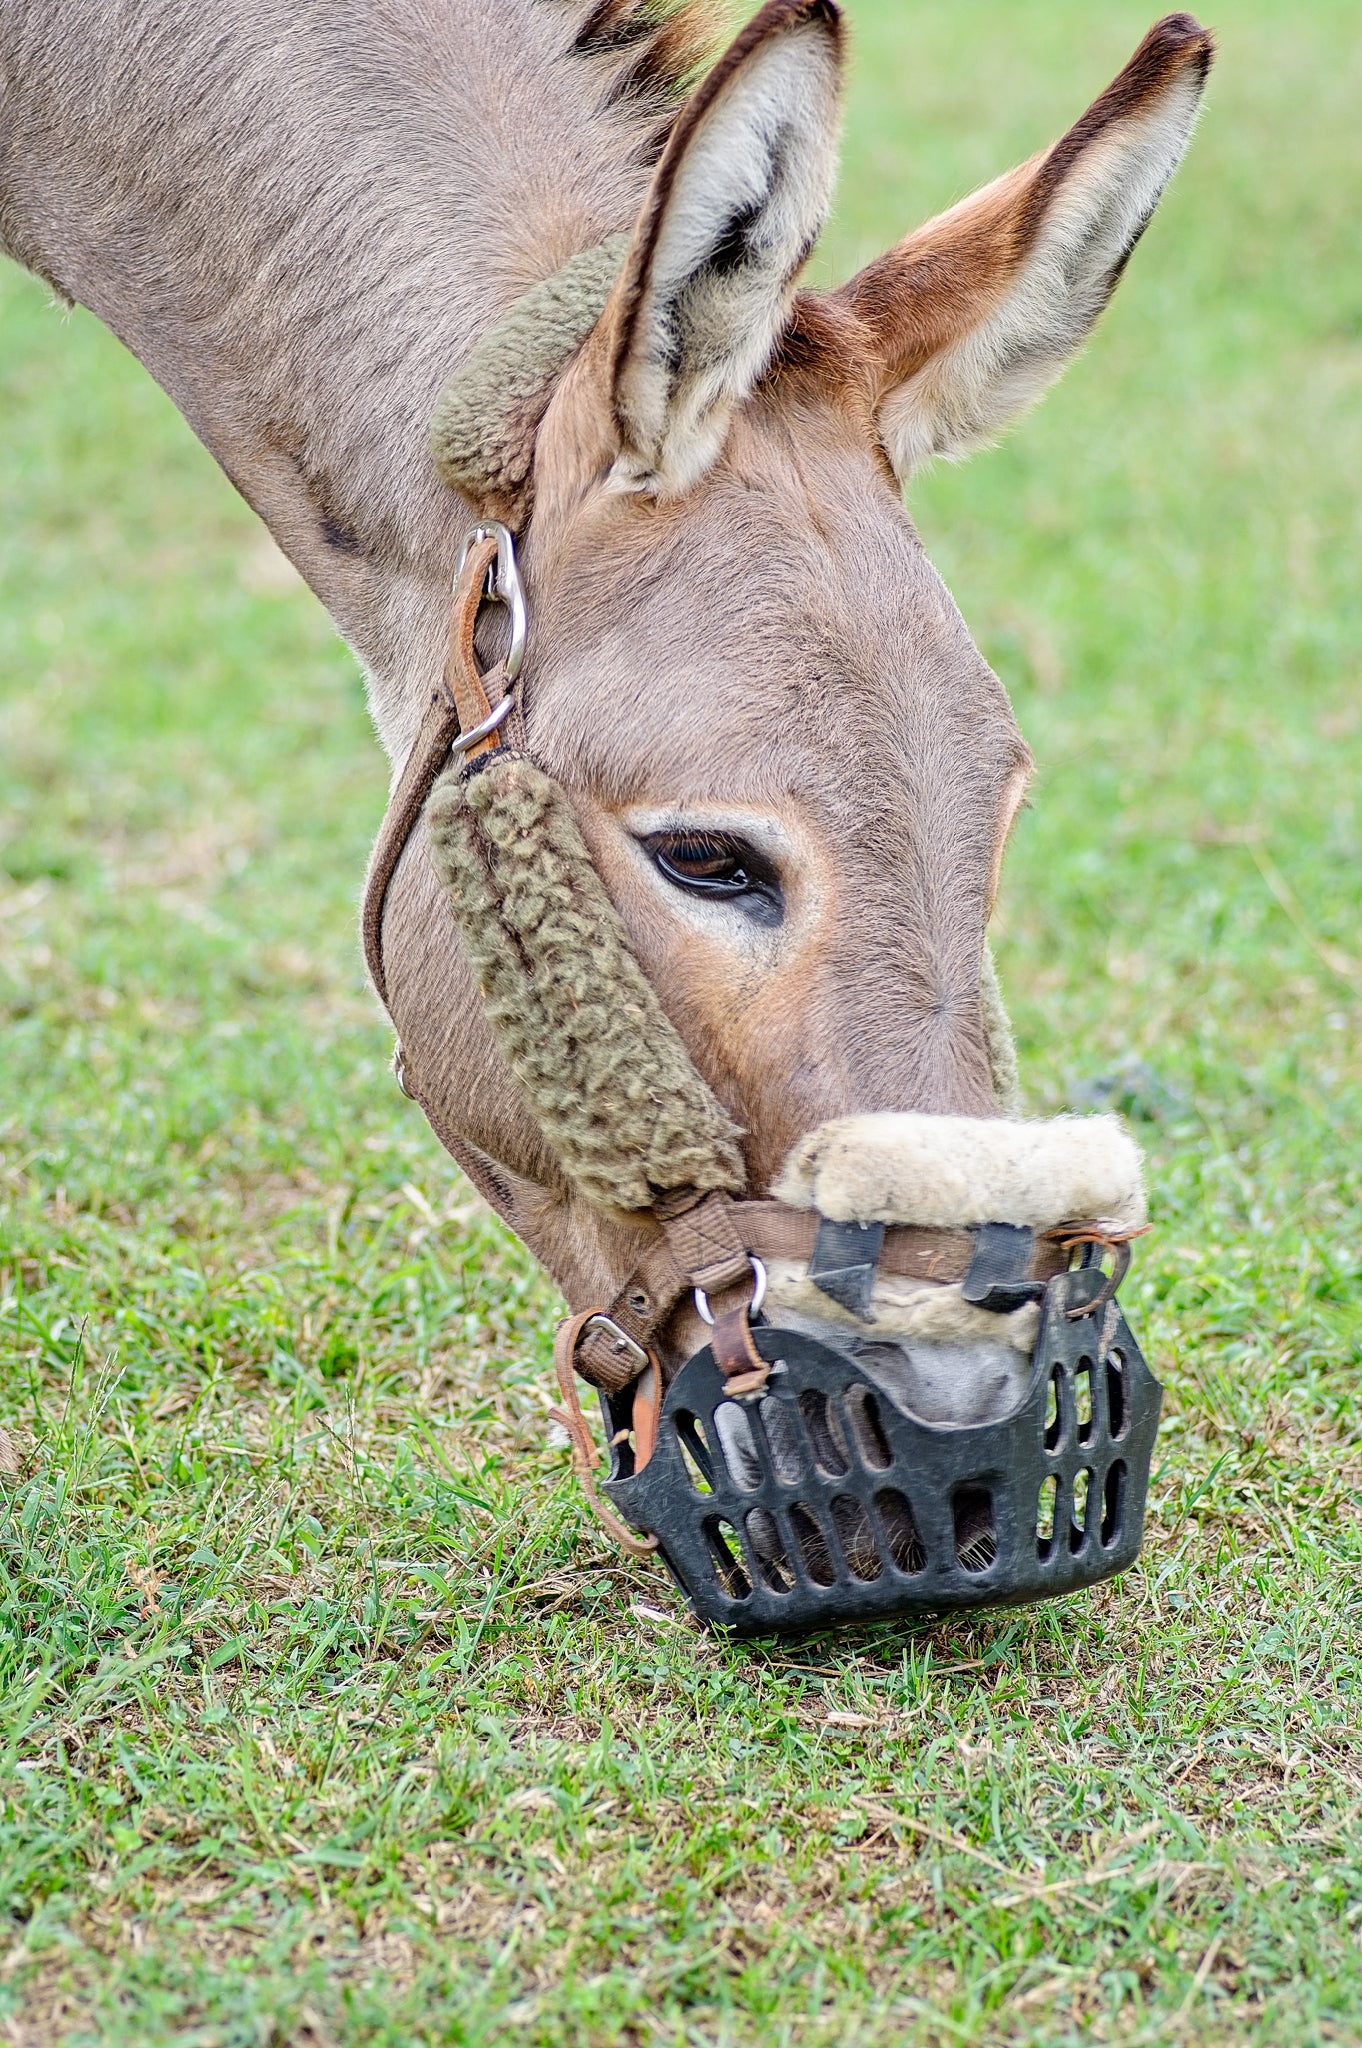 Molly the Donkey. Photo credit: Kevin Pinkerton